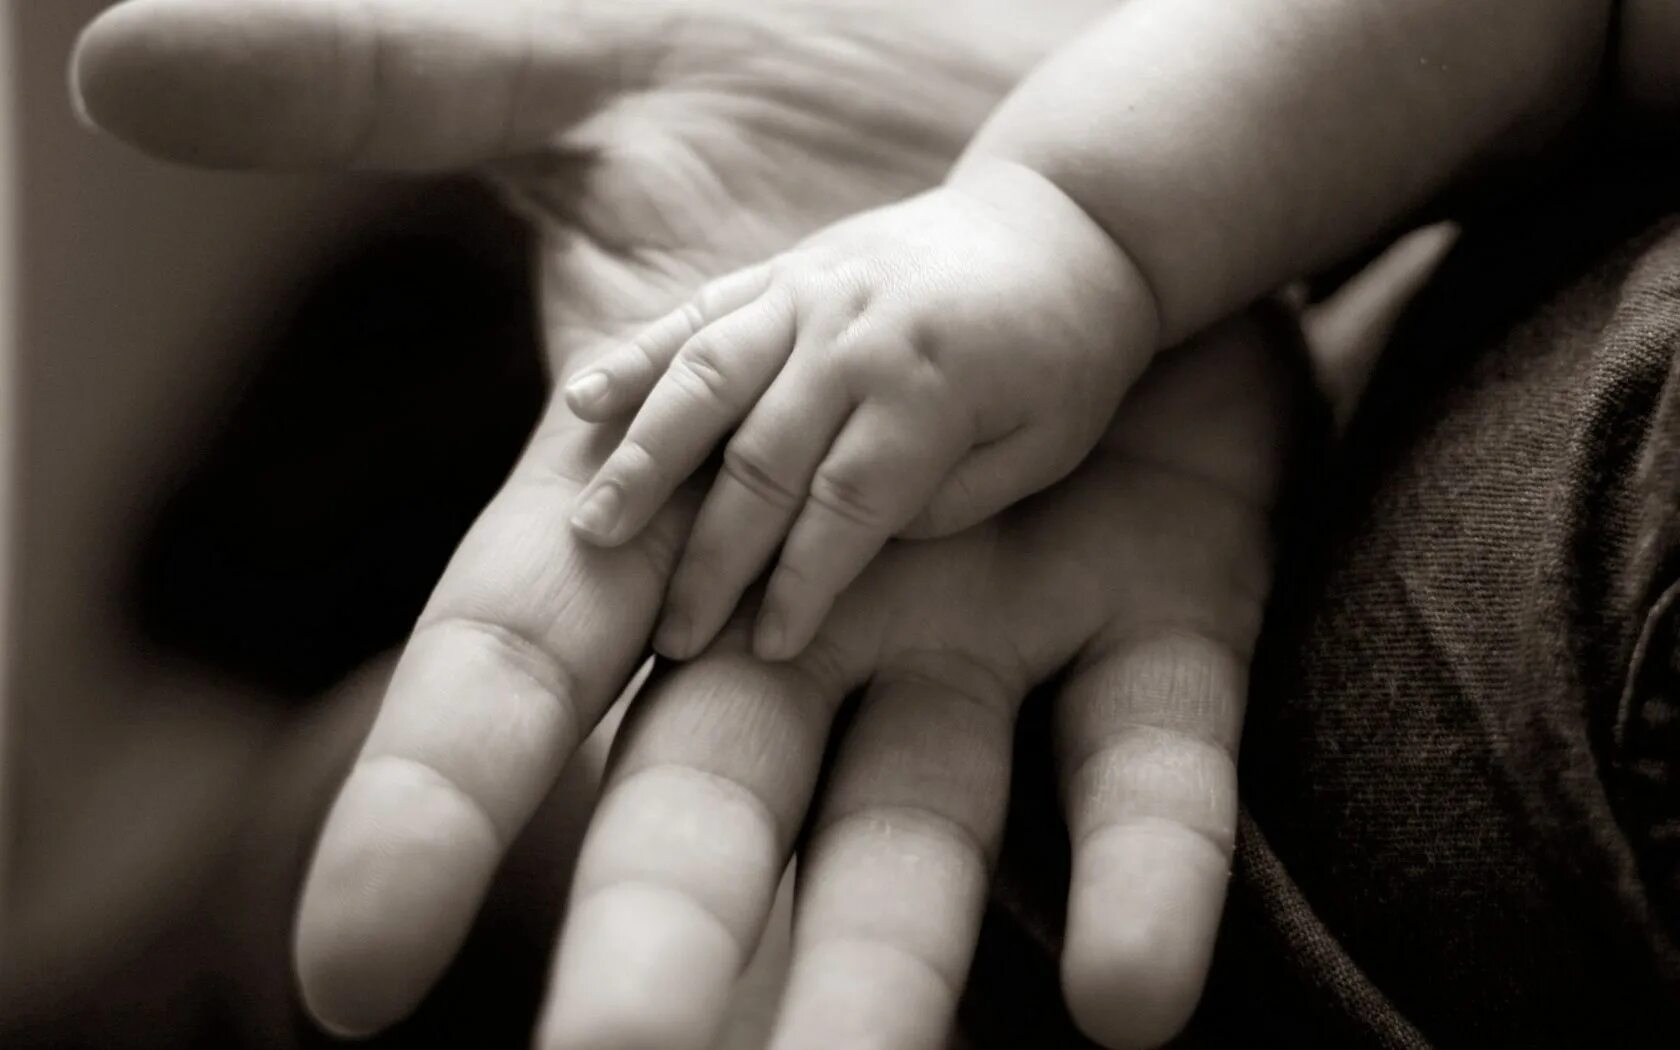 Папа дай руку. Руки мамы. Ребенок на руках. Мужская и детская рука. Ладони мамы папы и малыша.